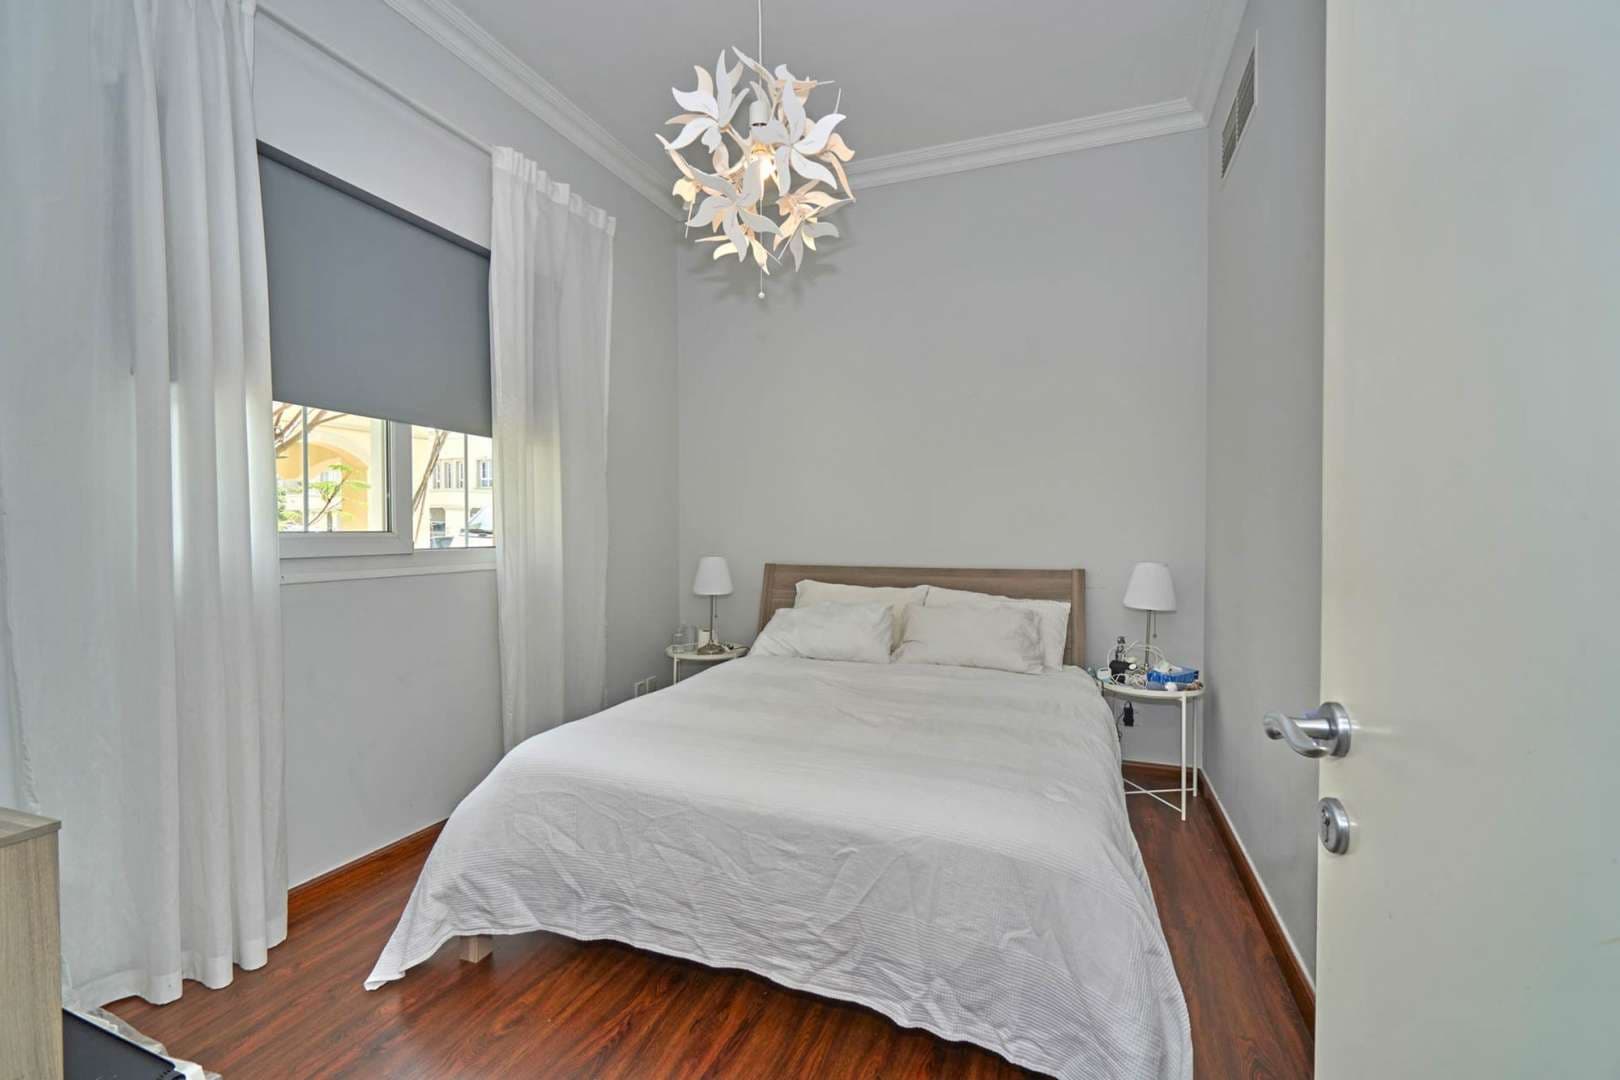 3 Bedroom Villa For Rent Springs 15 Lp05943 206ac6a50a3c6400.jpg